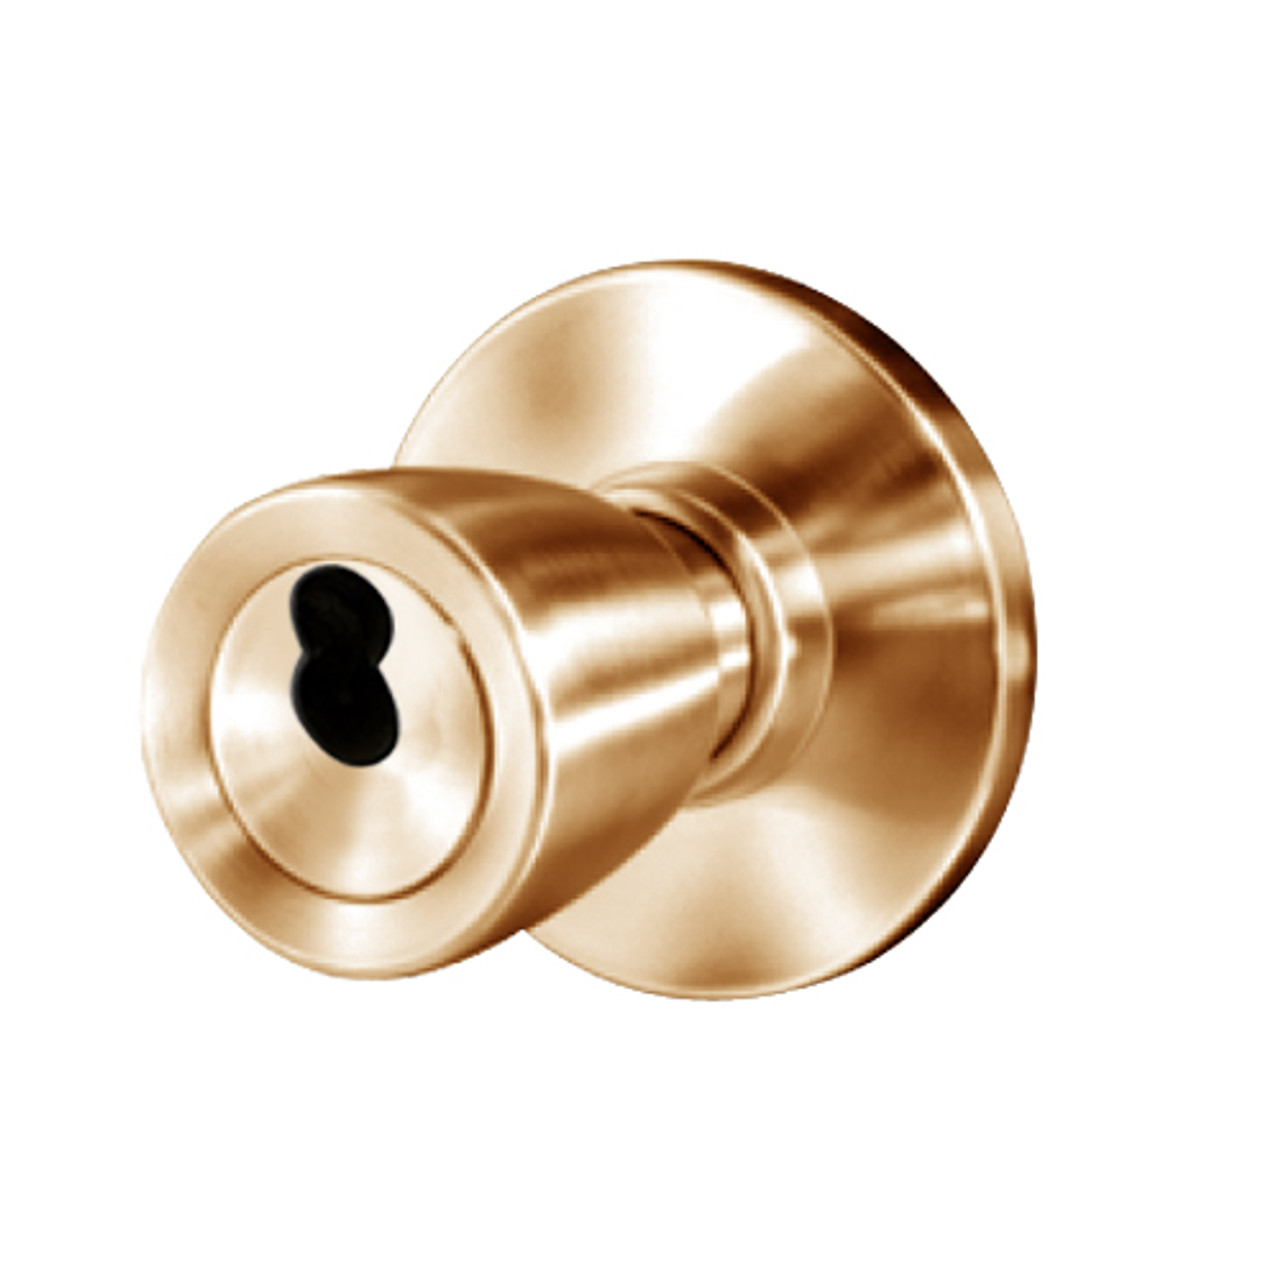 8K47YD6ASTK611 Best 8K Series Exit Heavy Duty Cylindrical Knob Locks with Tulip Style in Bright Bronze